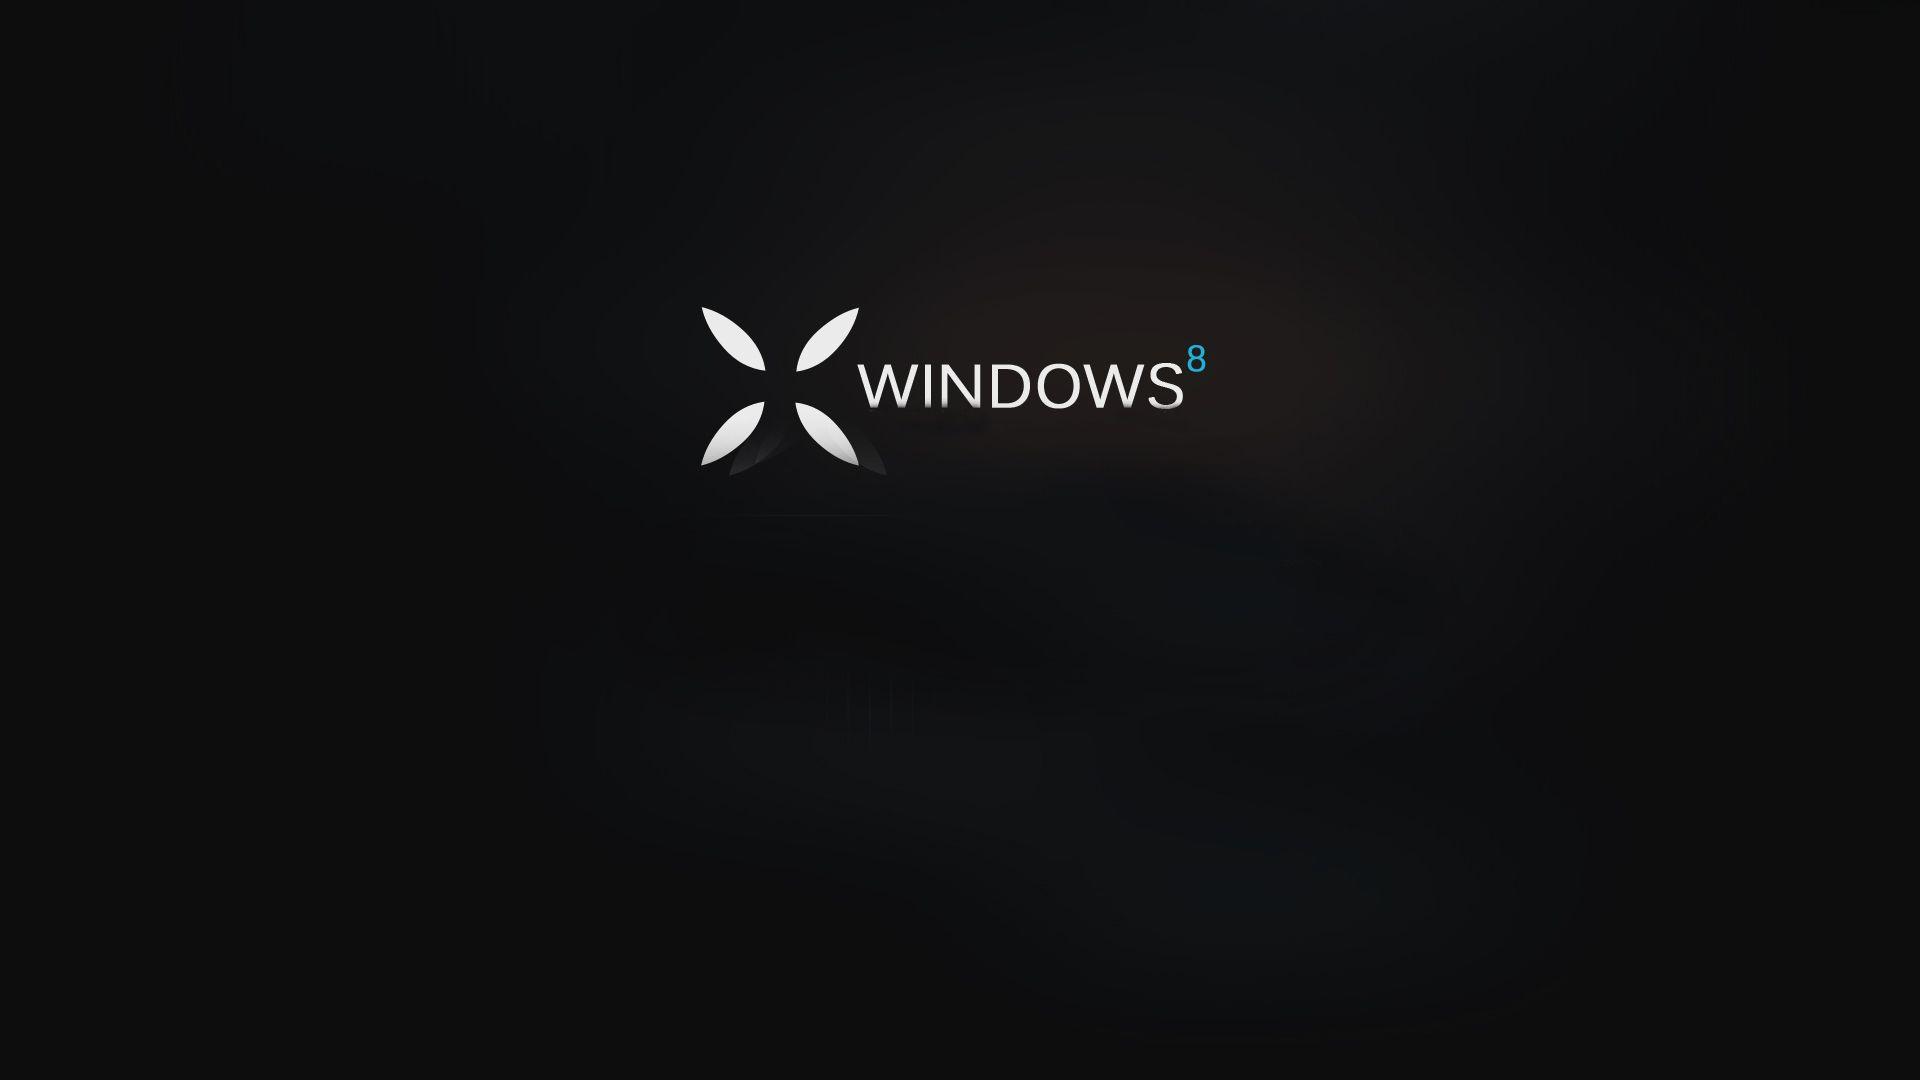 Windows 10 Wallpaper Black. (49++ Wallpaper)